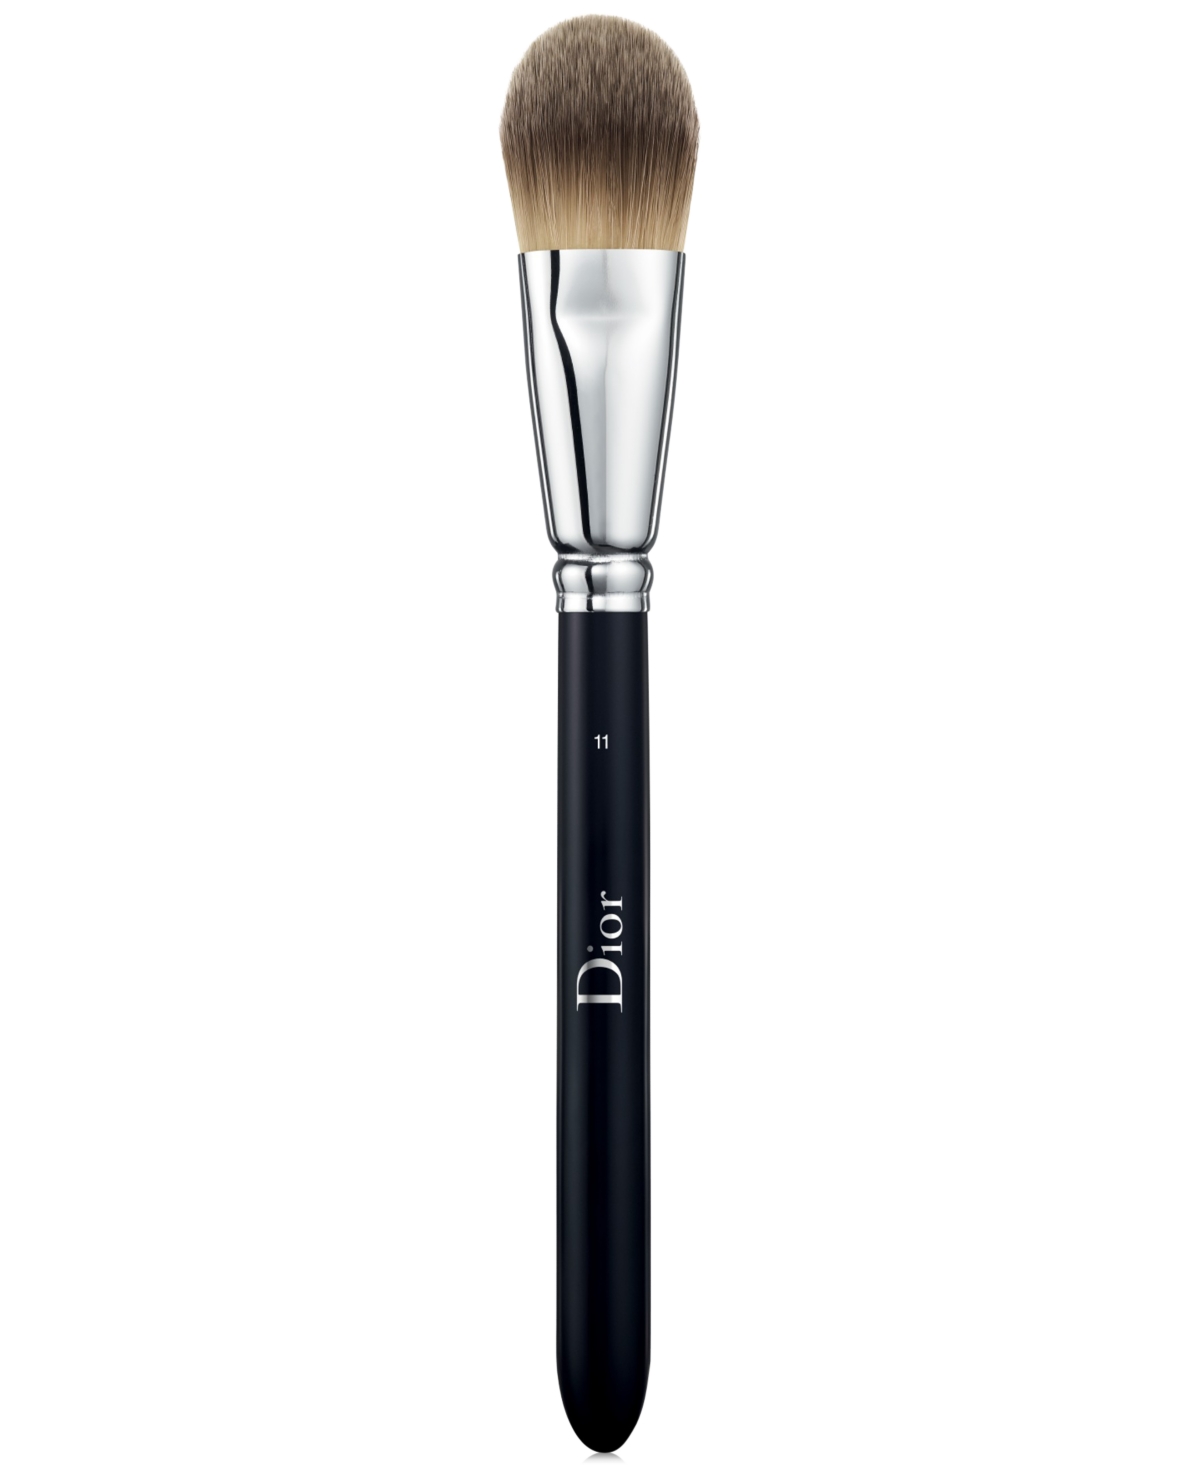 Dior Backstage Light Coverage Fluid Foundation Brush N°11 In No Color